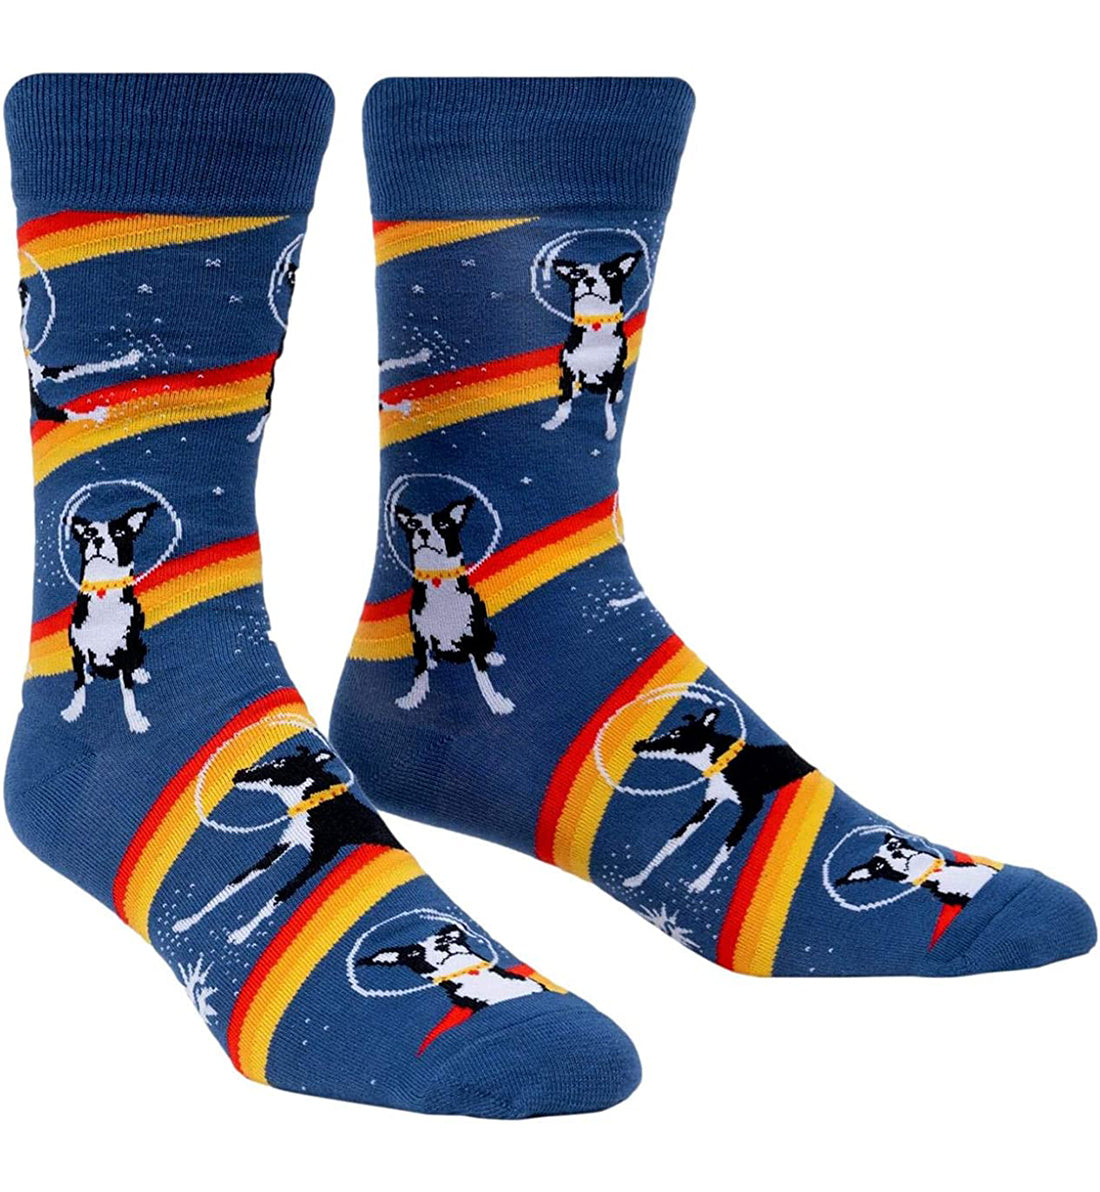 SOCK it to me Men's Crew Socks (mef0507),Astro Puppy - Astro Puppy,One Size